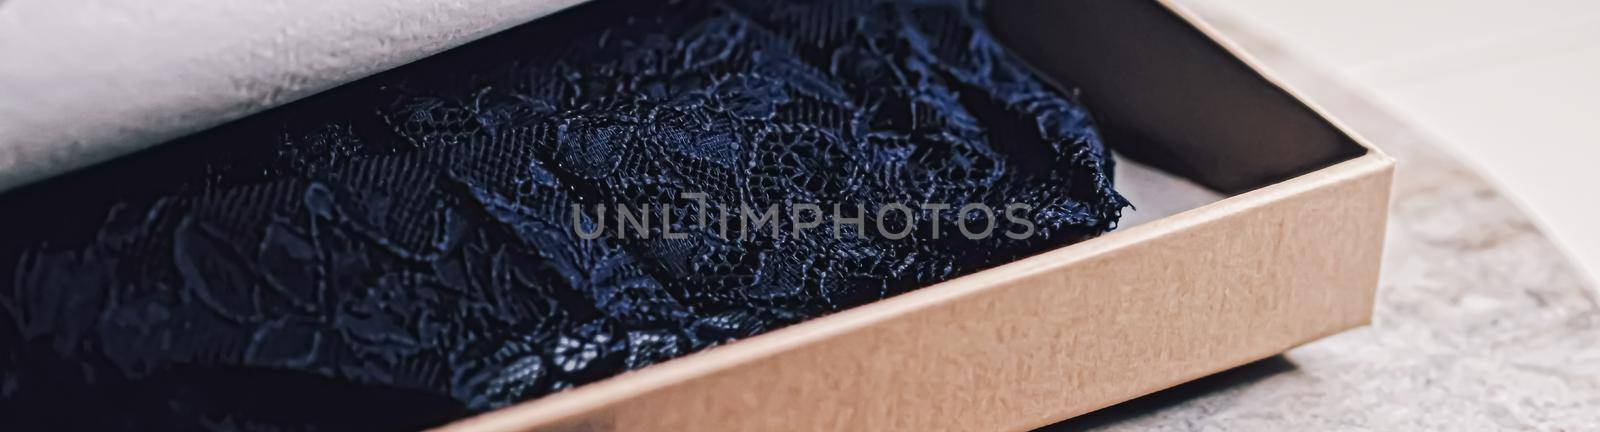 Lace garment inside elegant gift box as luxury purchase, closeup